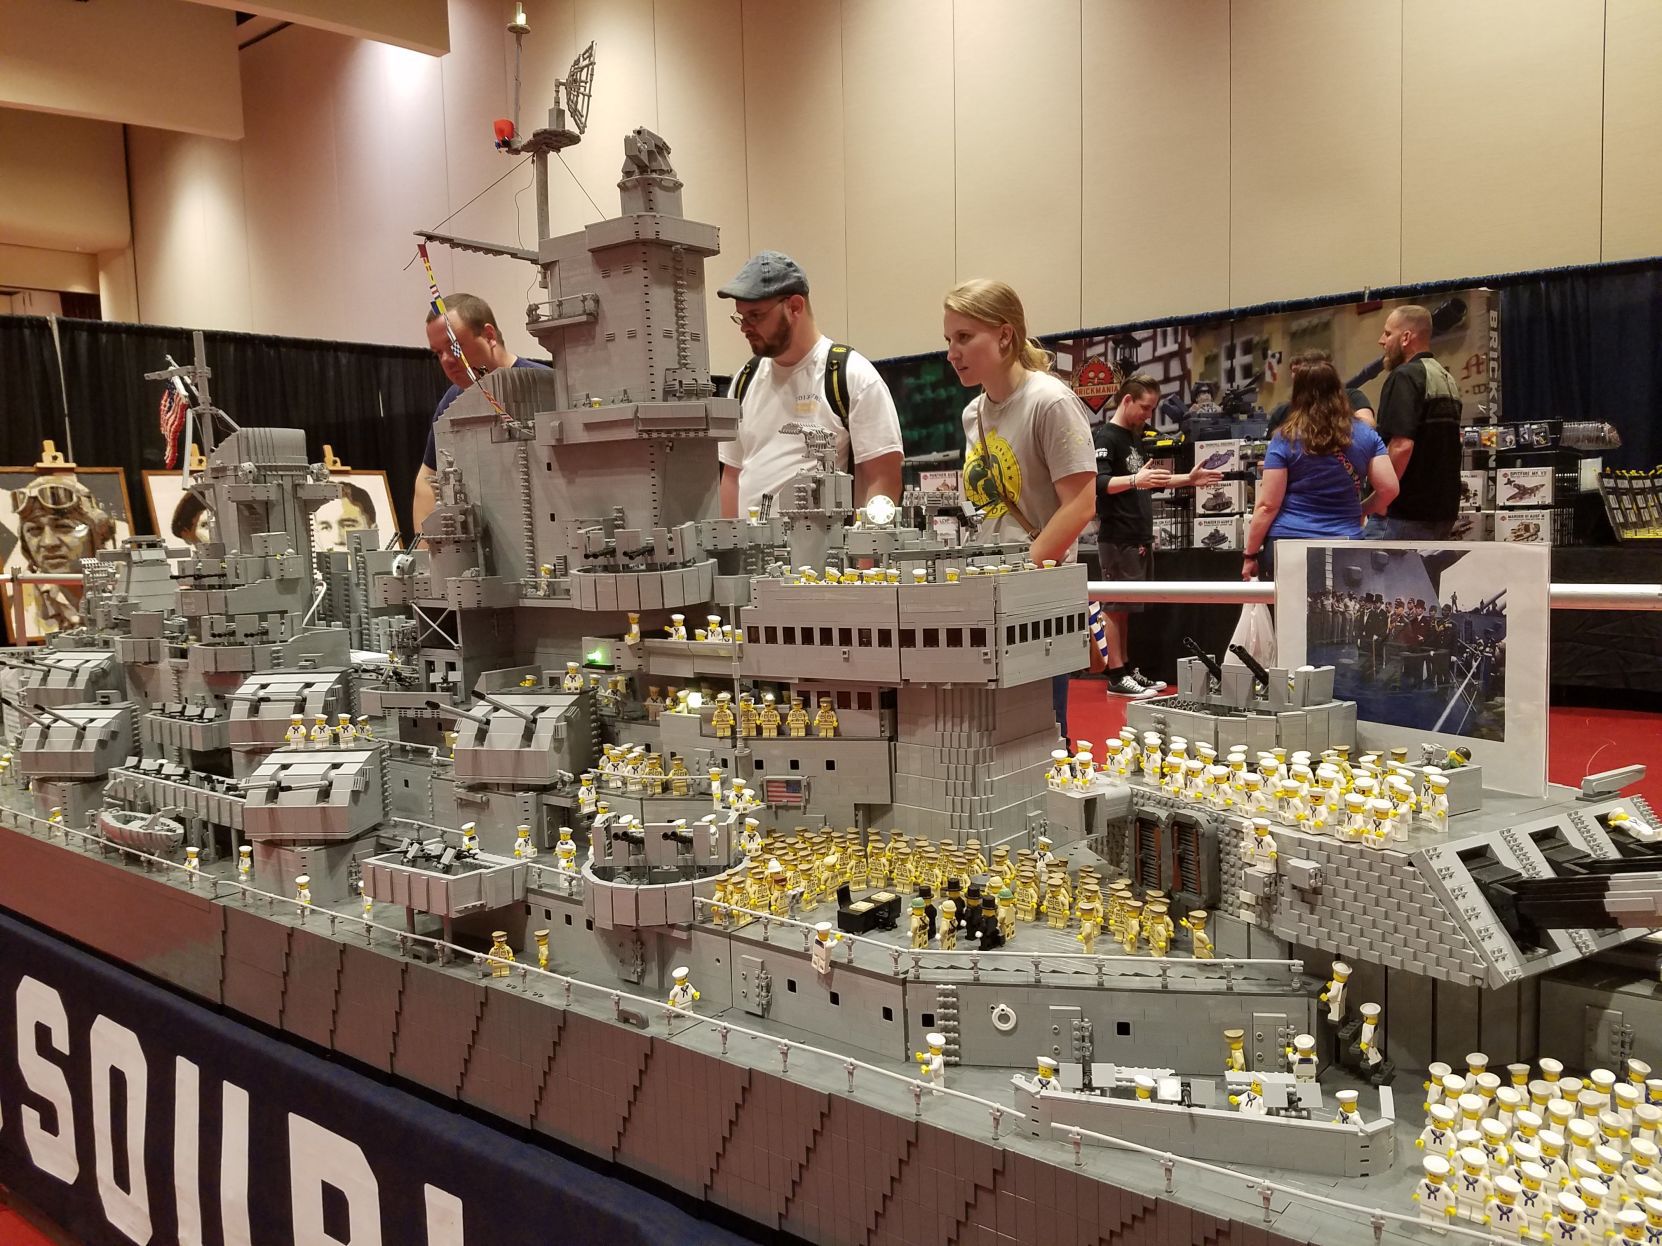 lego battleships for sale